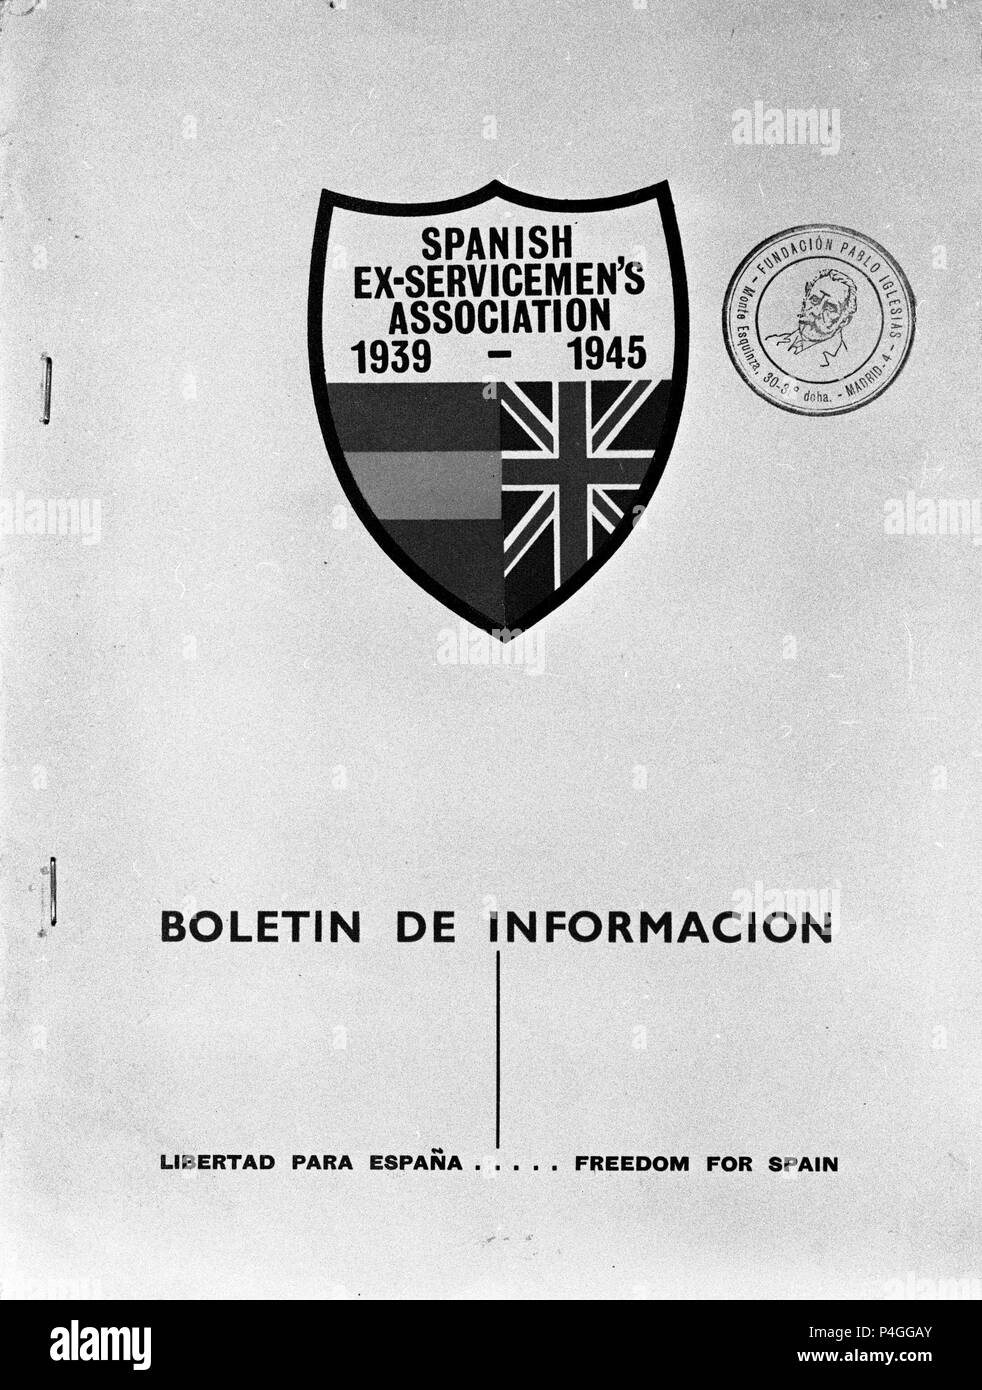 BOLETIN DE INFORMACION DE LA ASOCIACION DE EX- MILITARES ESPAÑOLES 1939- 1945. Location: FUNDACION PABLO IGLESIAS, MADRID, SPAIN. Stock Photo